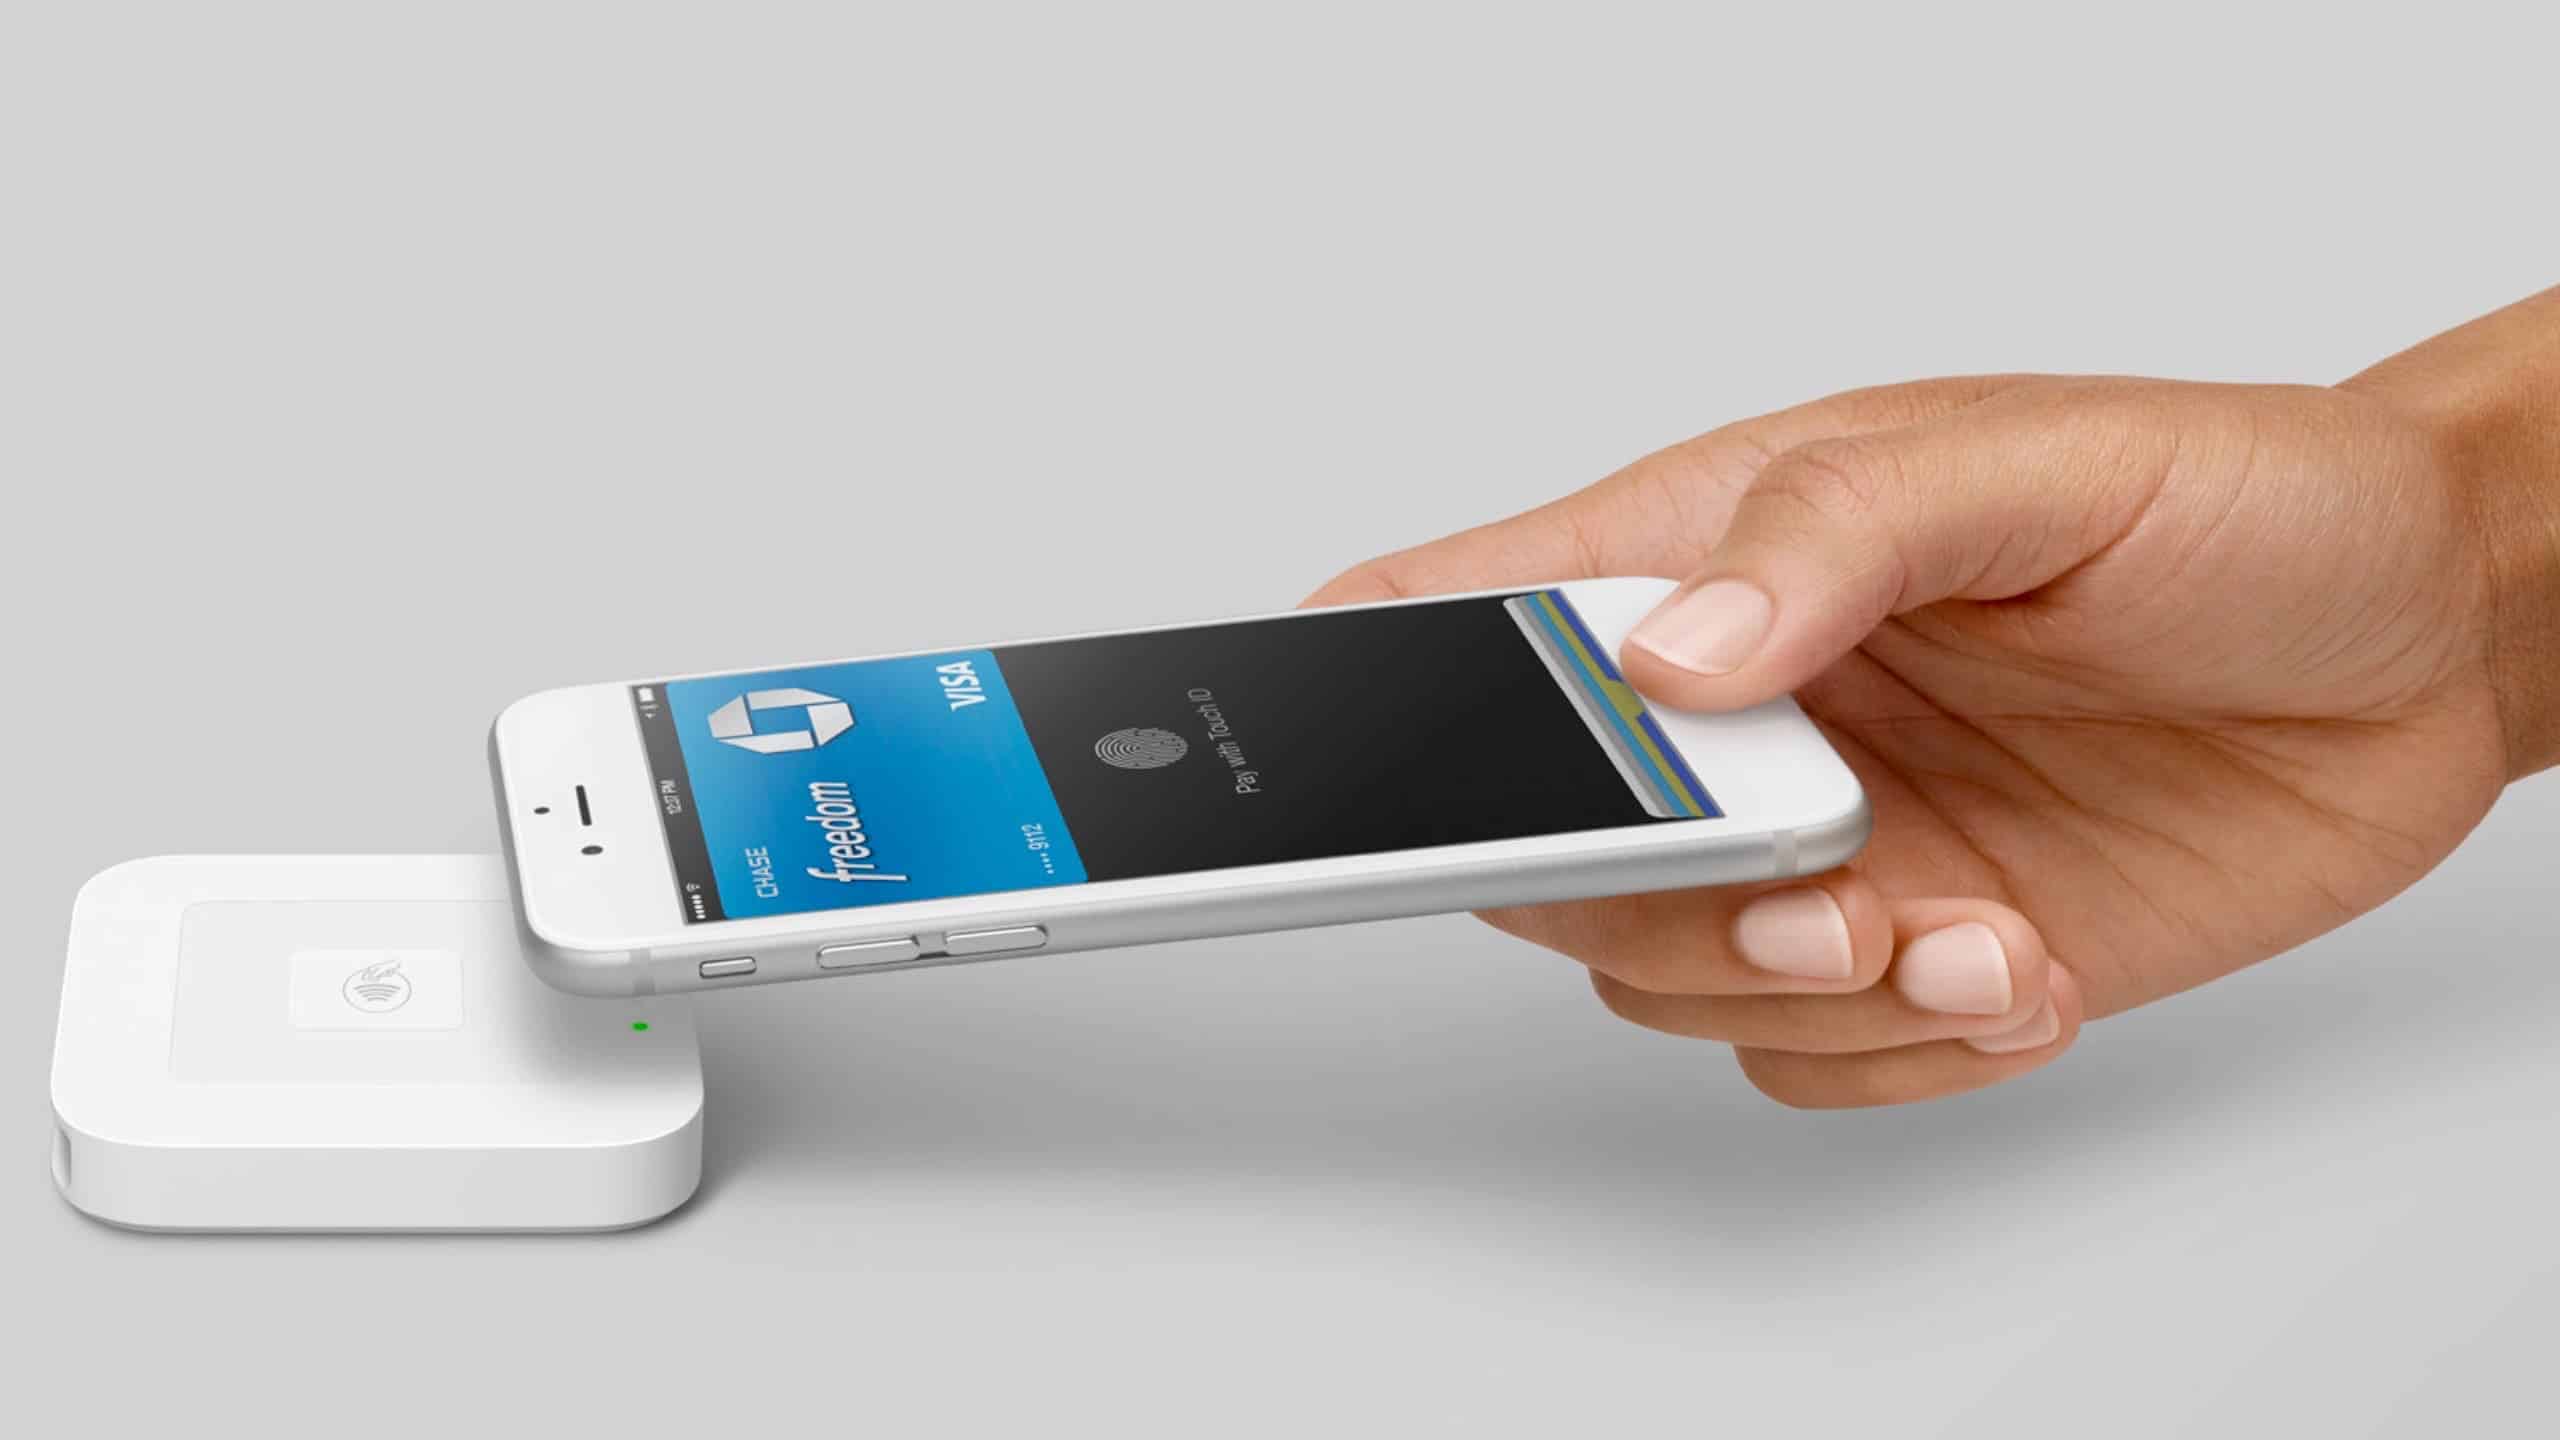 tecnologia de pagamento sem contato, permite que o iPhone aceite pagamentos